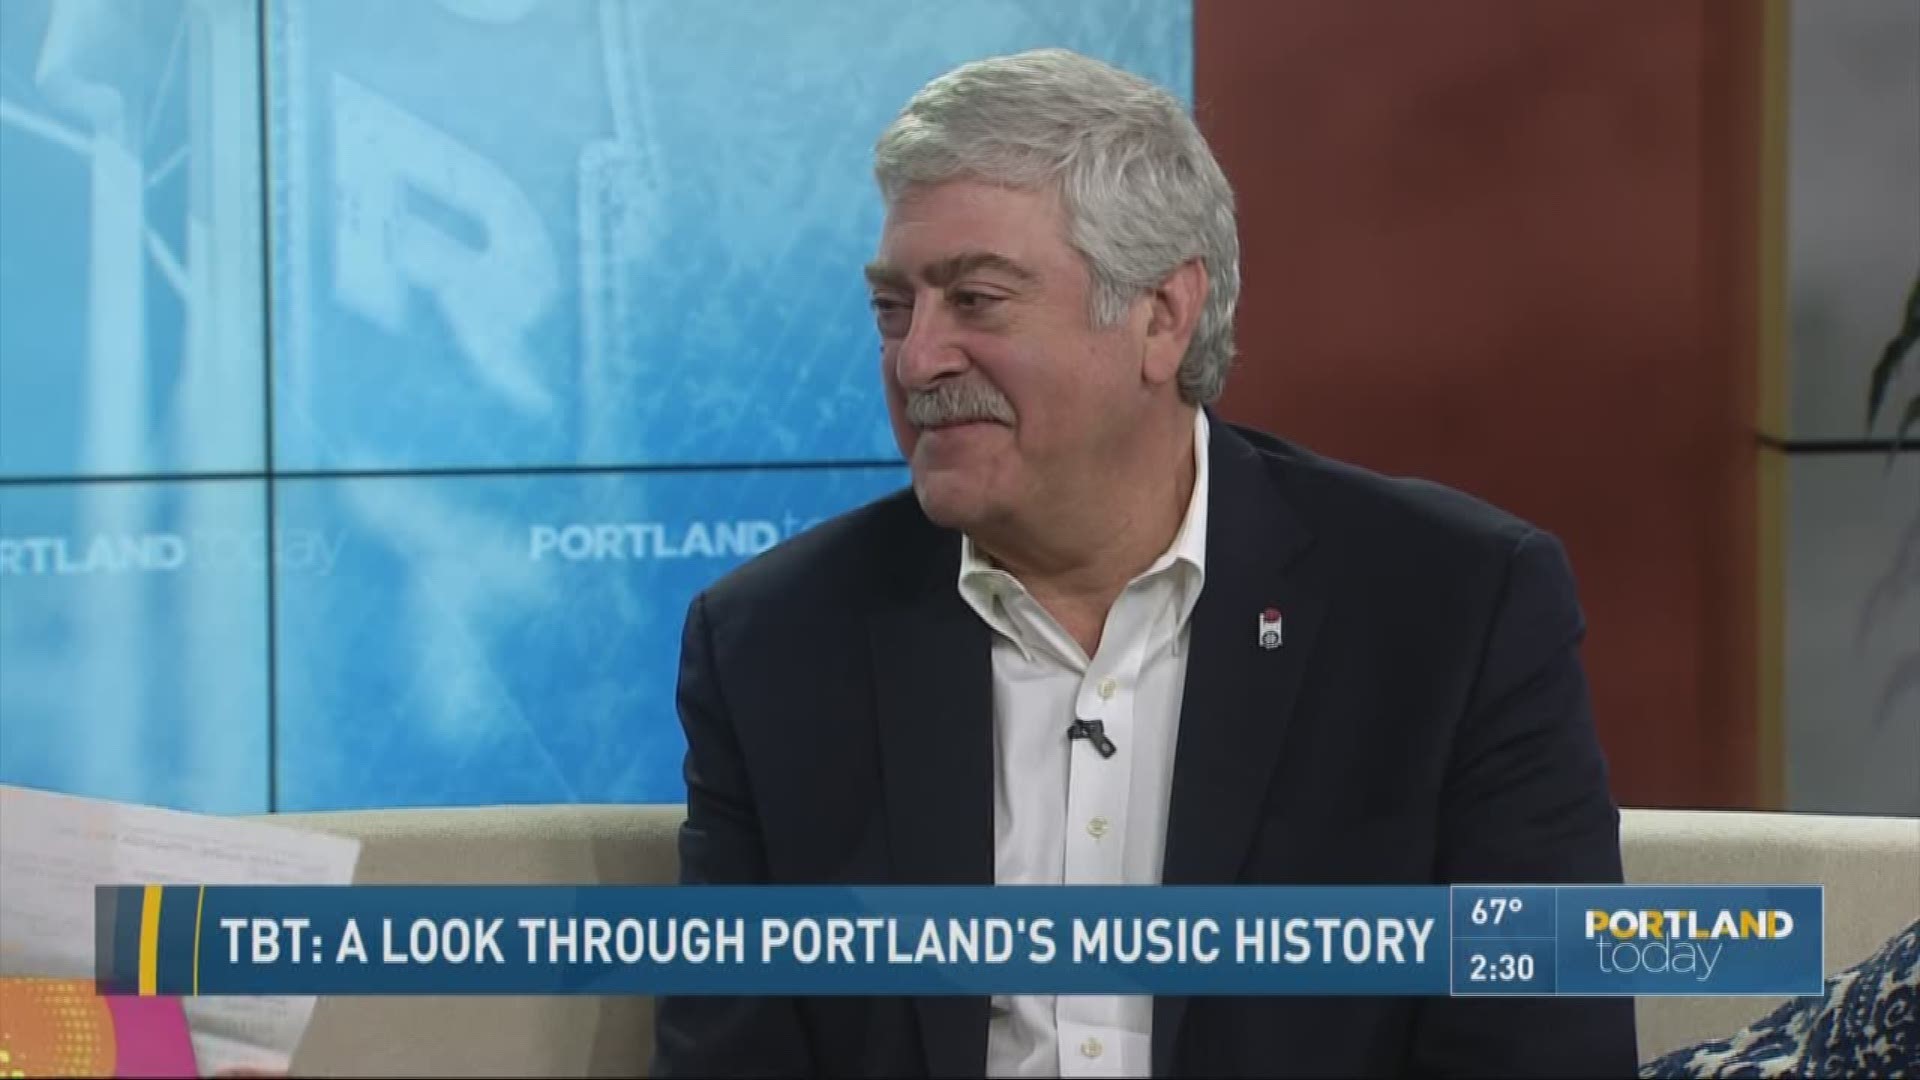 TBT: A look through Portland's Music History